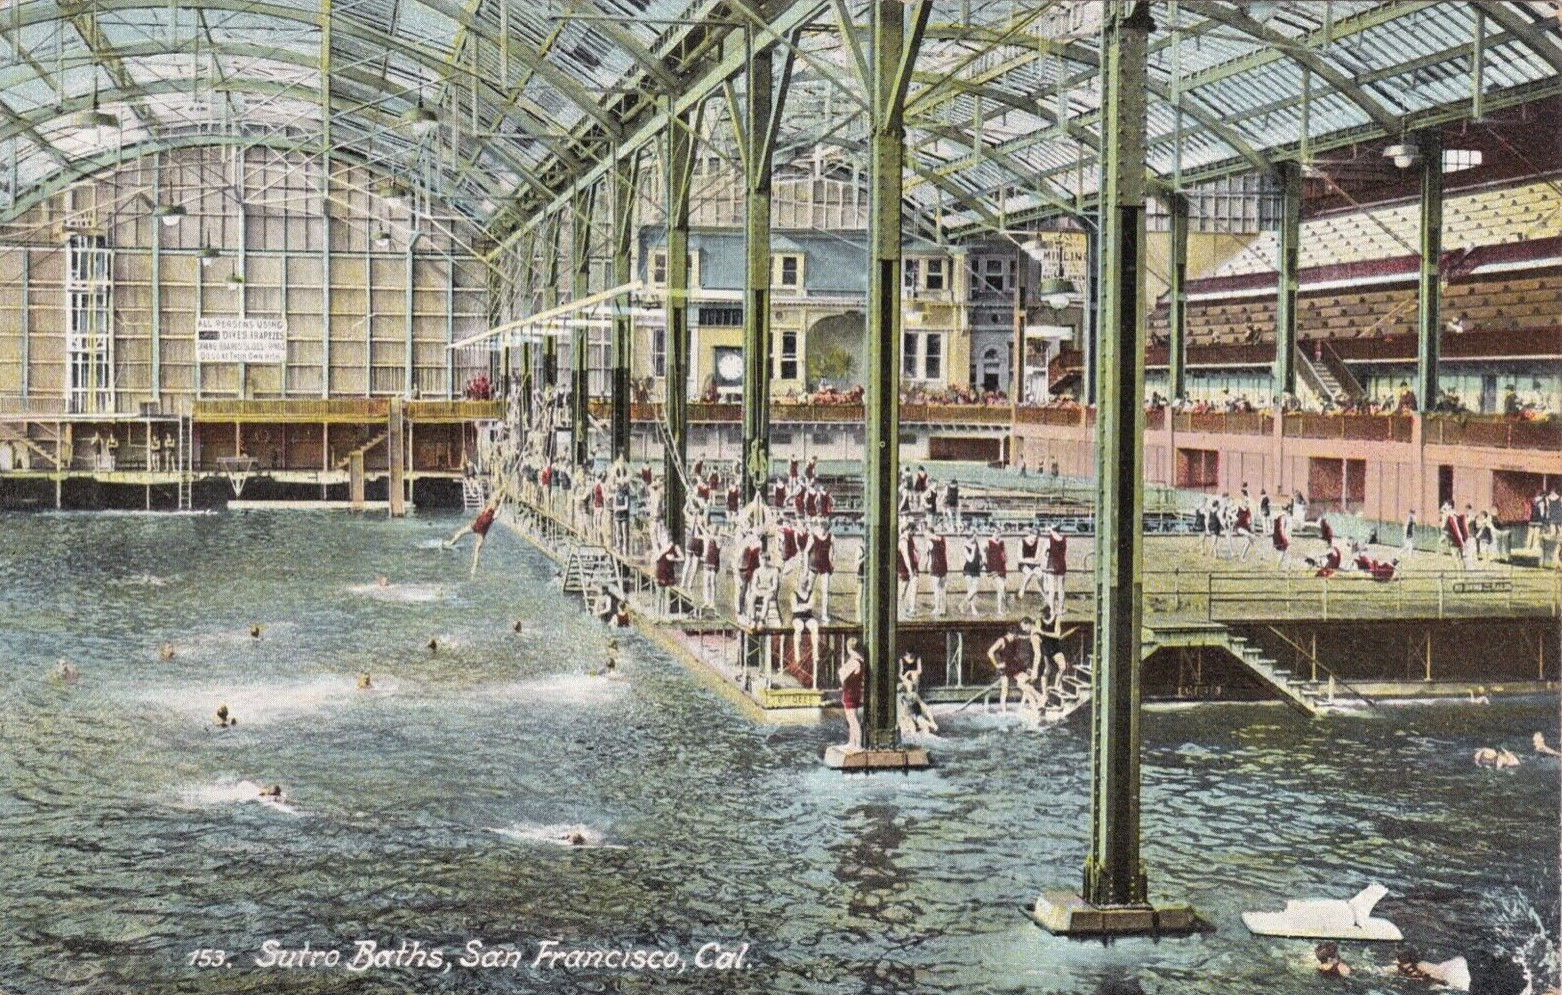 Postkarte Sutro Baths in San Francisco um 1900